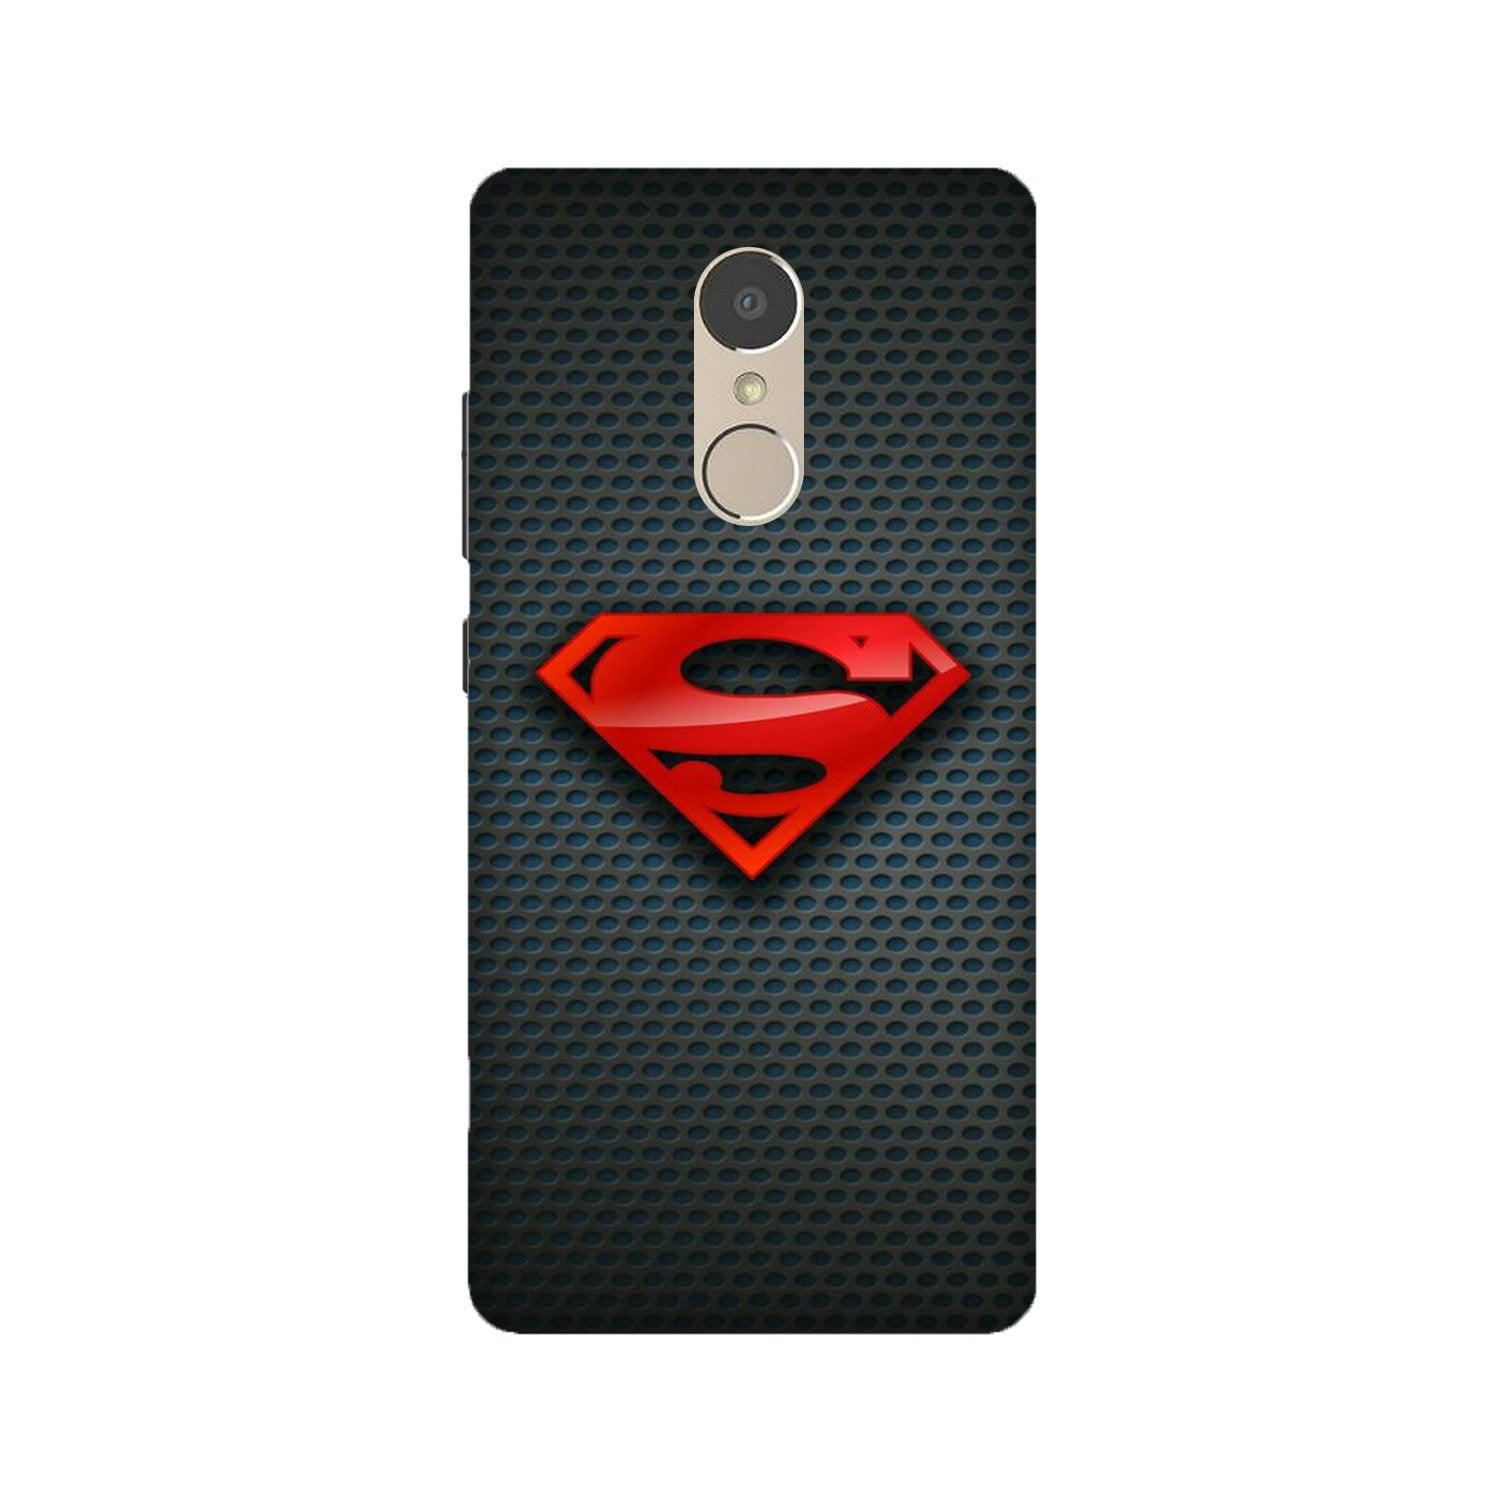 Superman Case for Lenovo K6 Note (Design No. 247)